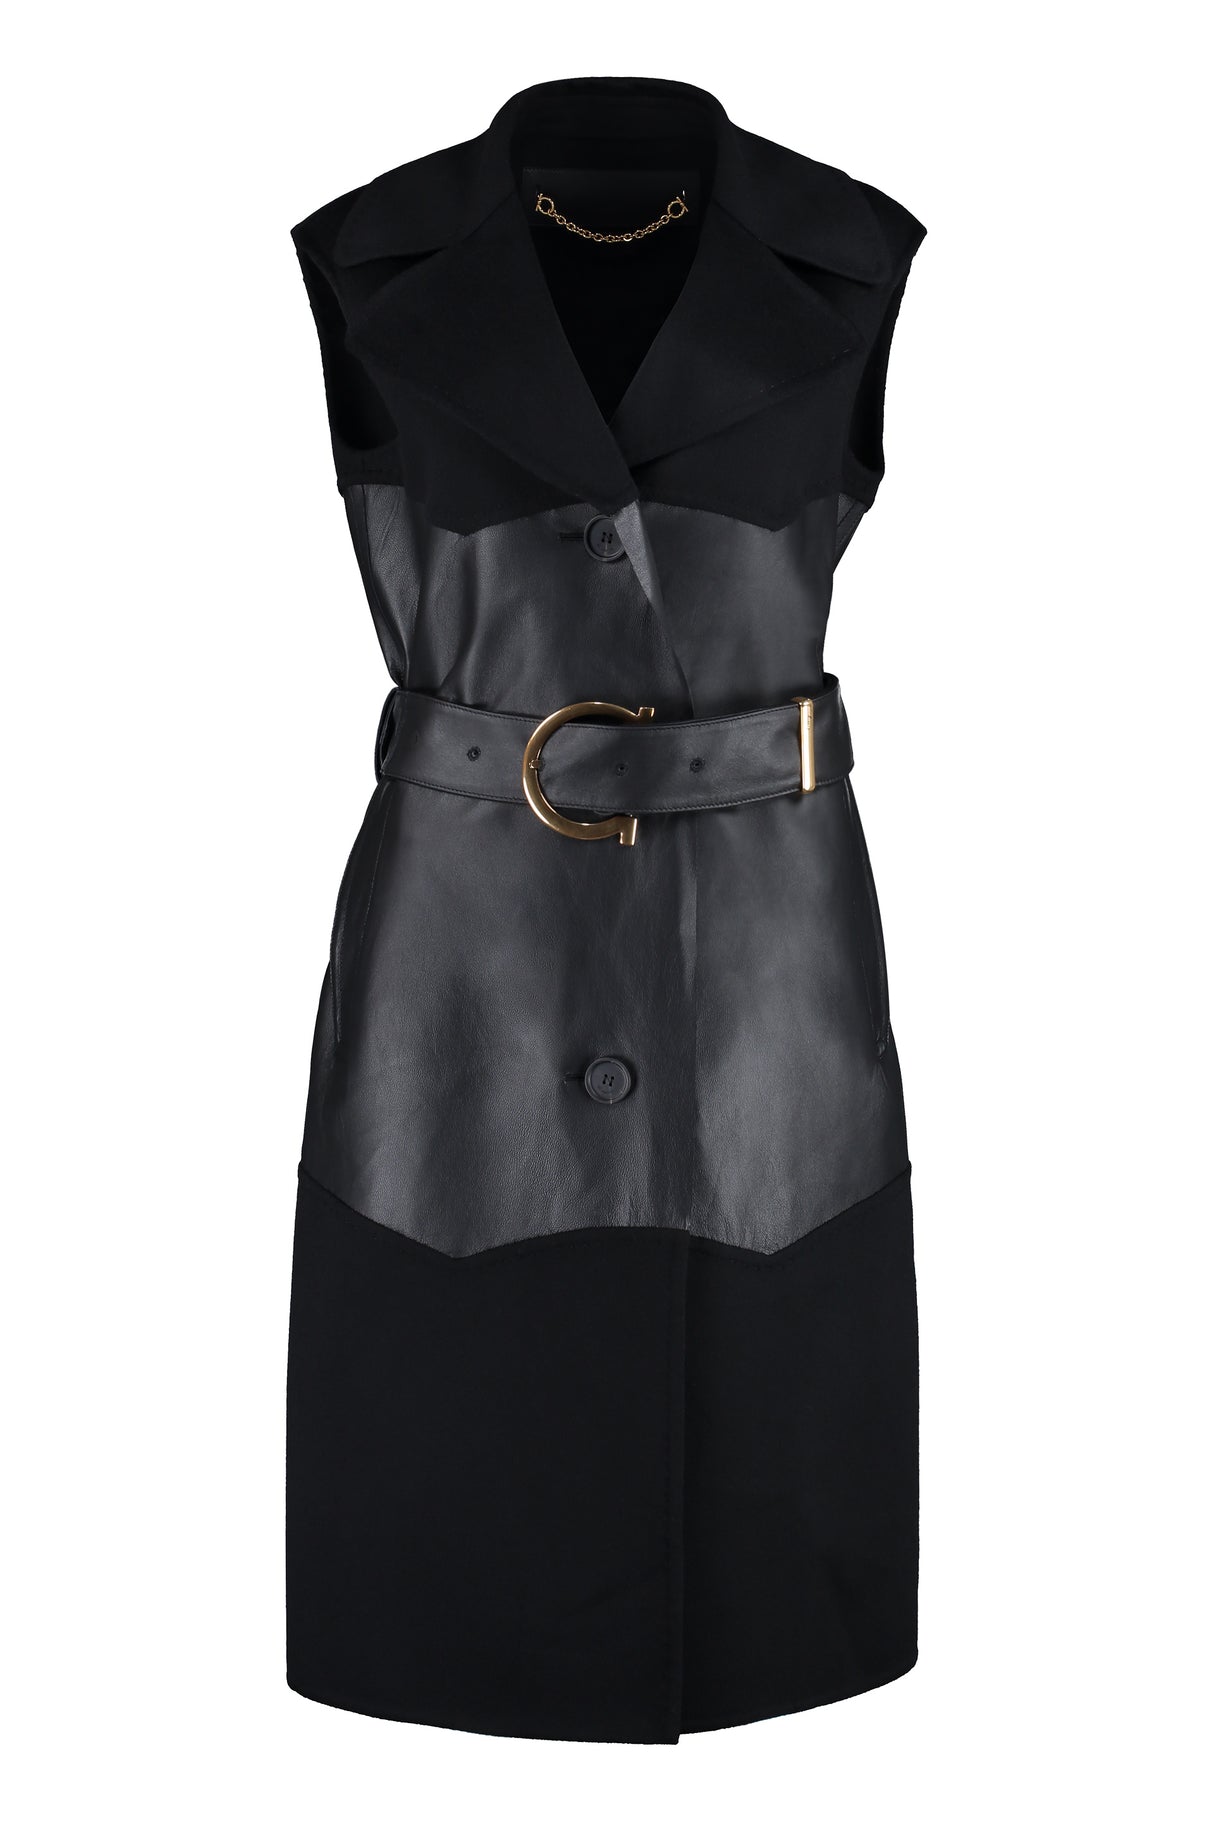 FERRAGAMO Sleeveless Wool and Cashmere Jacket for Women - Black